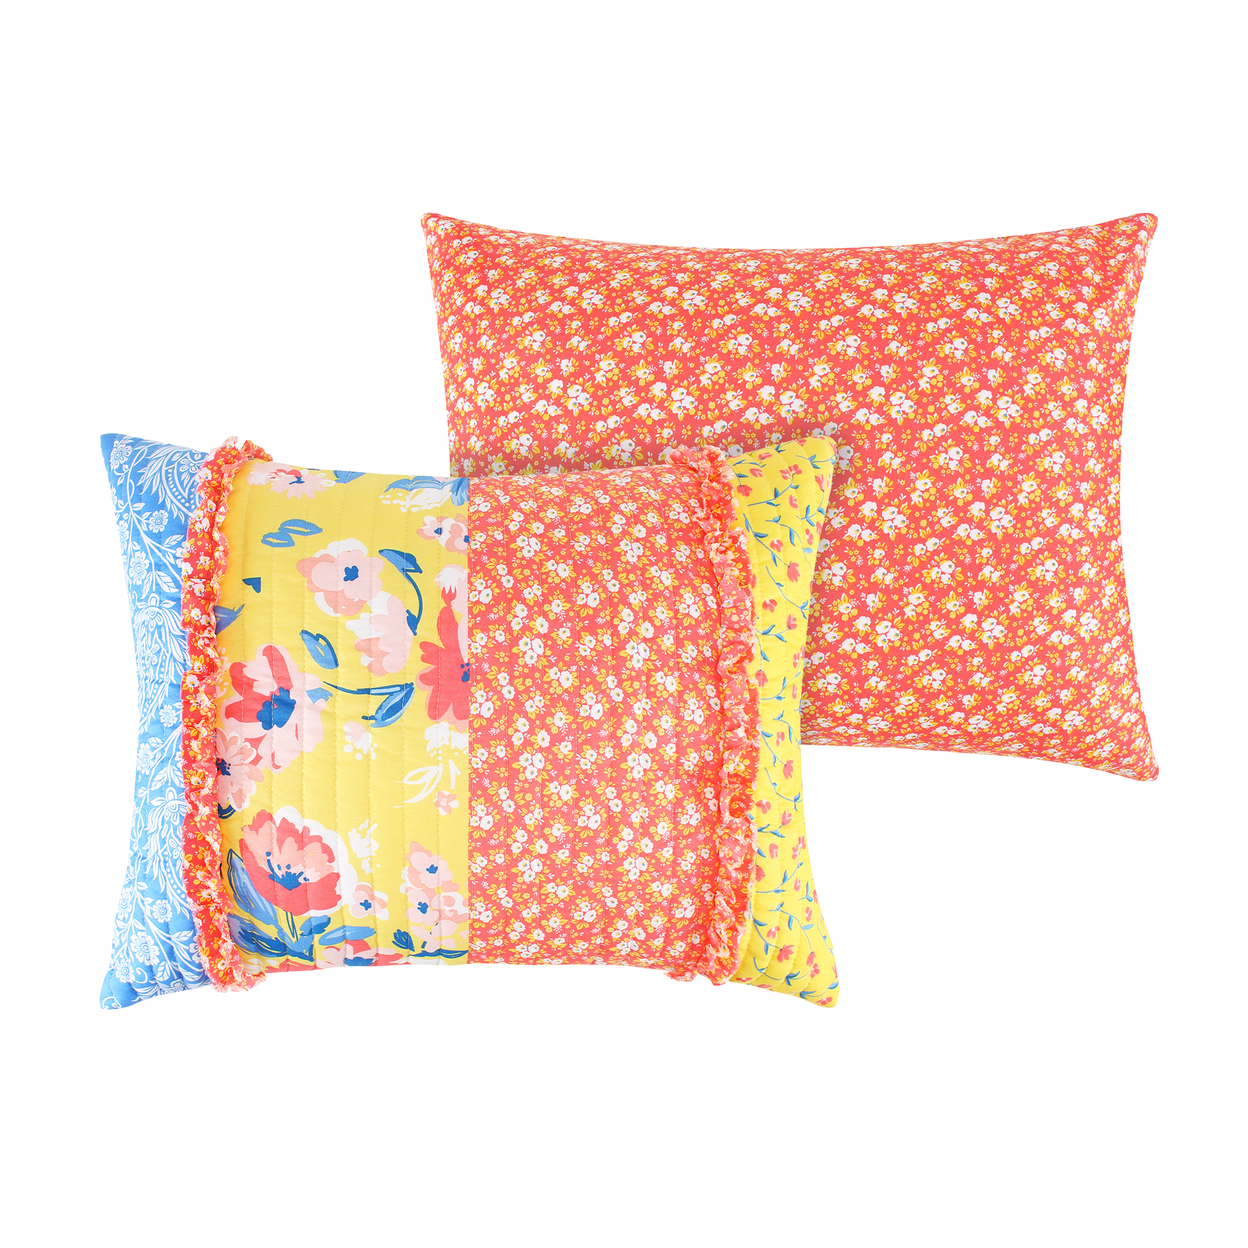 Lio Set Of 2 Standard And King Pillow Shams, Polyester Fill, Multicolor- Saltoro Sherpi